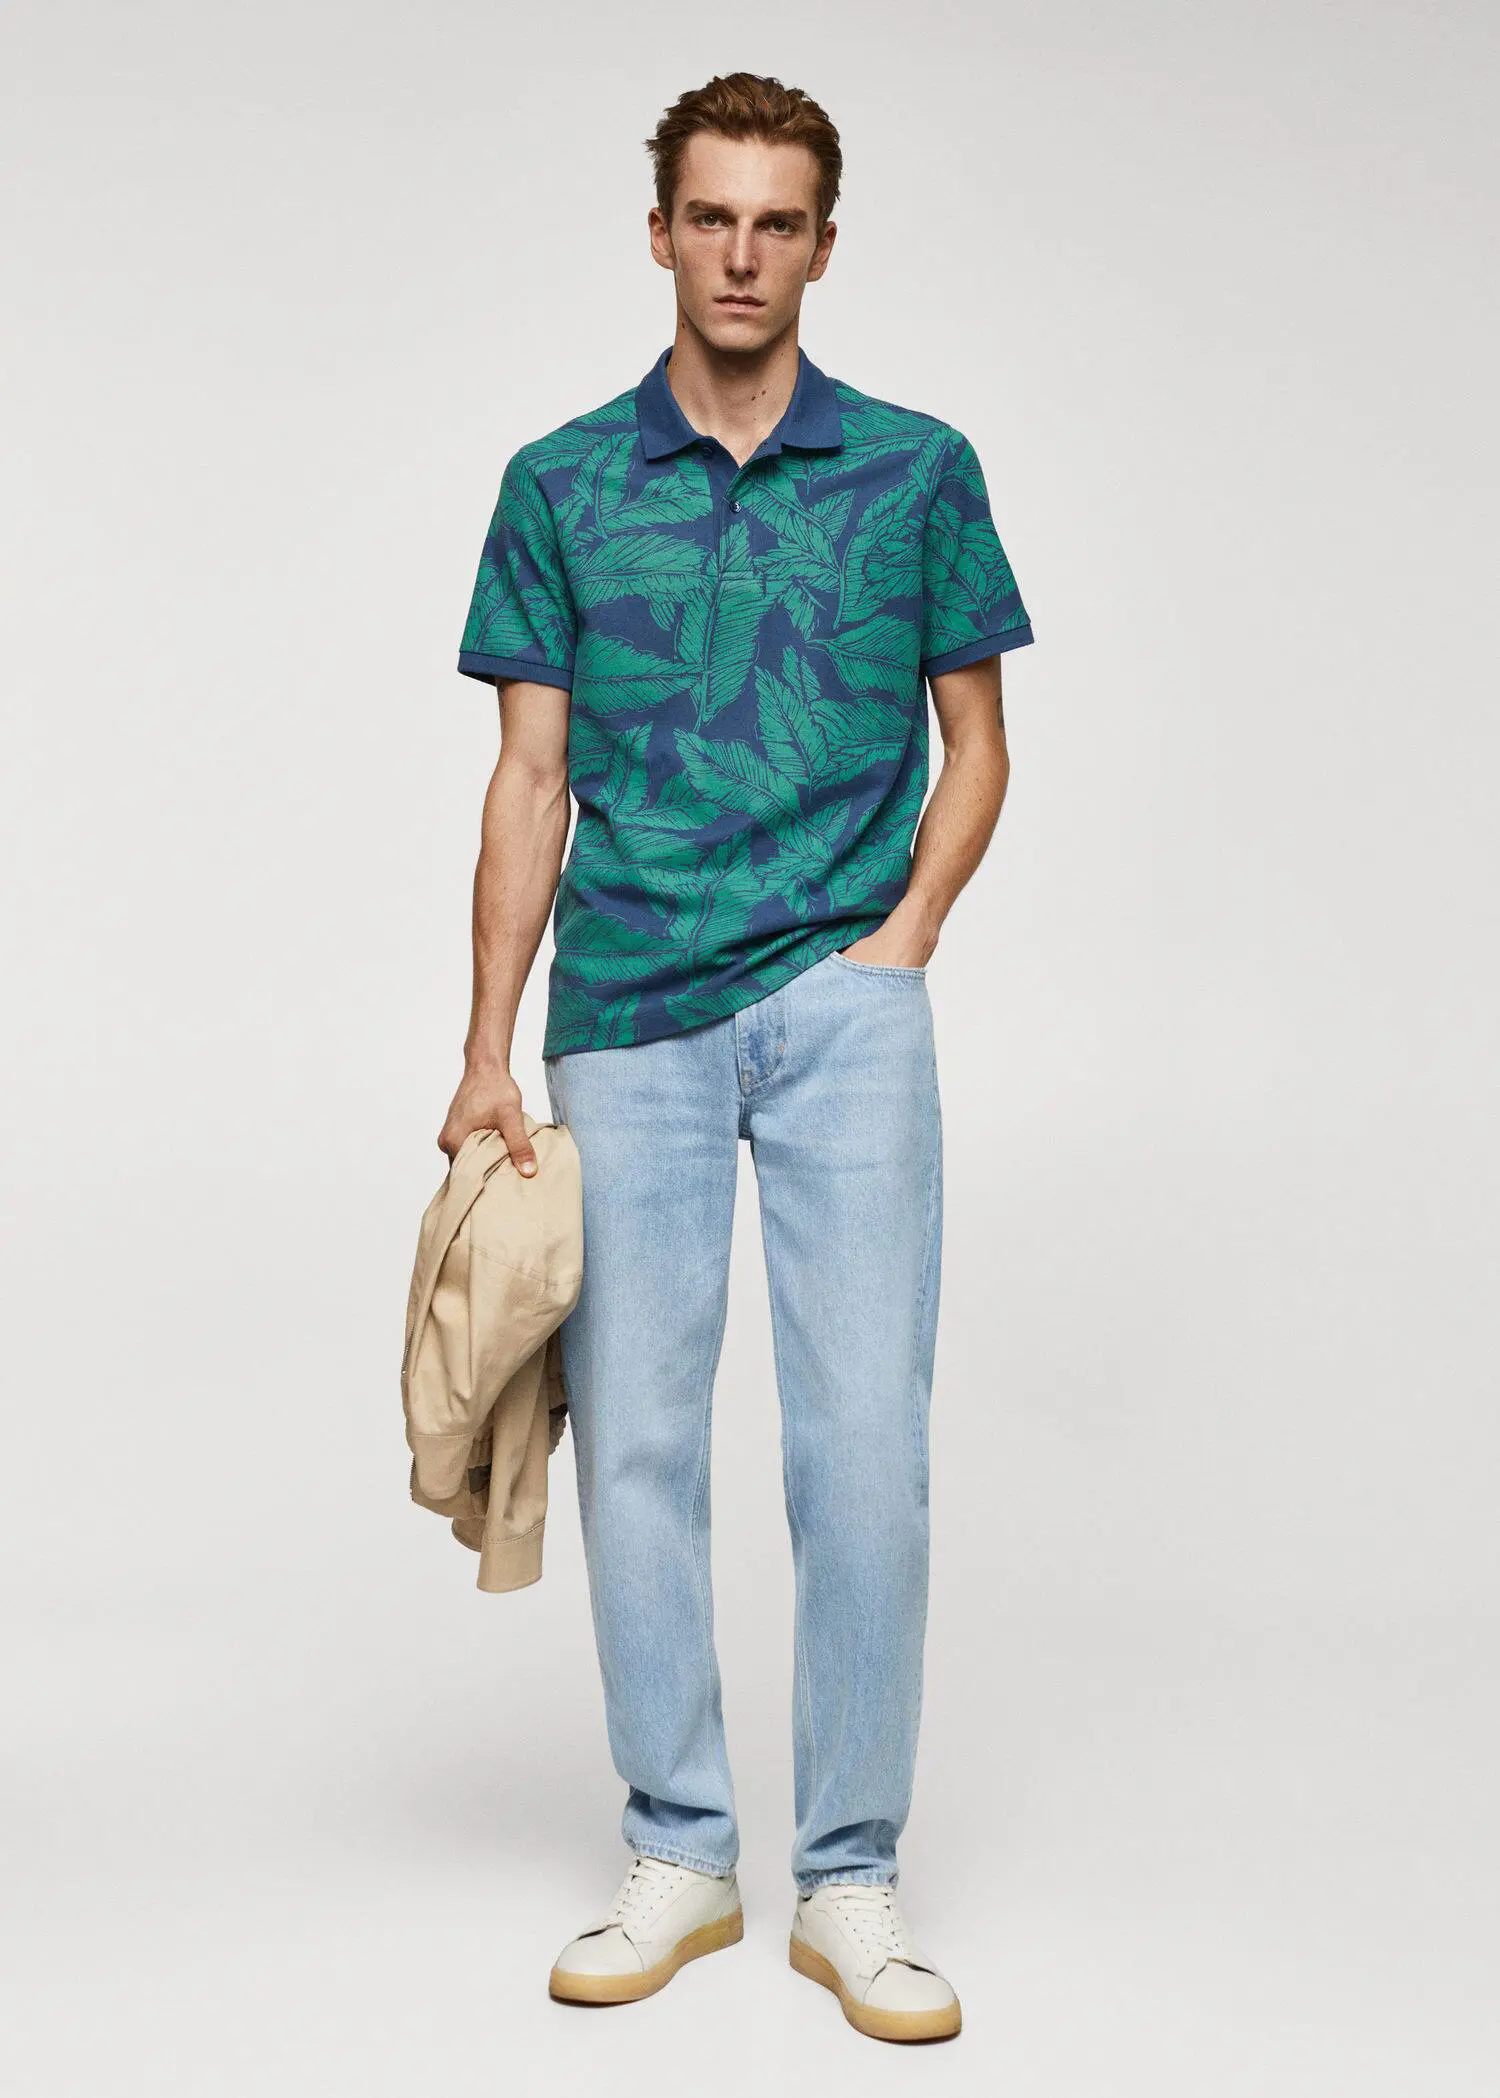 Mango Baumwoll-Poloshirt mit Tropical Print. 2